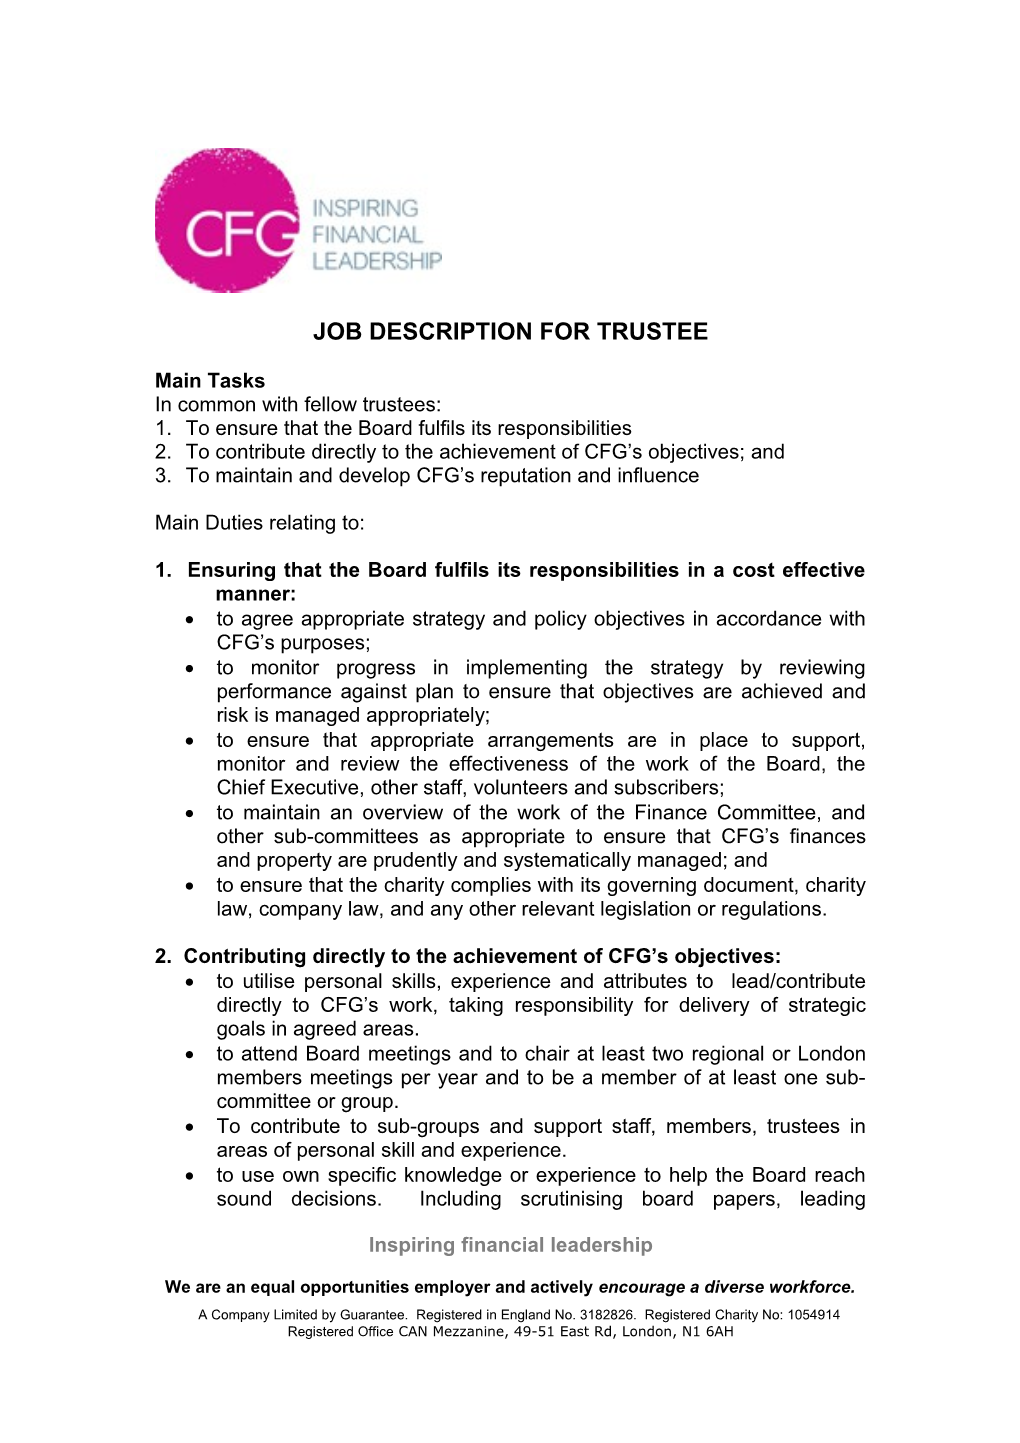 Job Description for Trustee